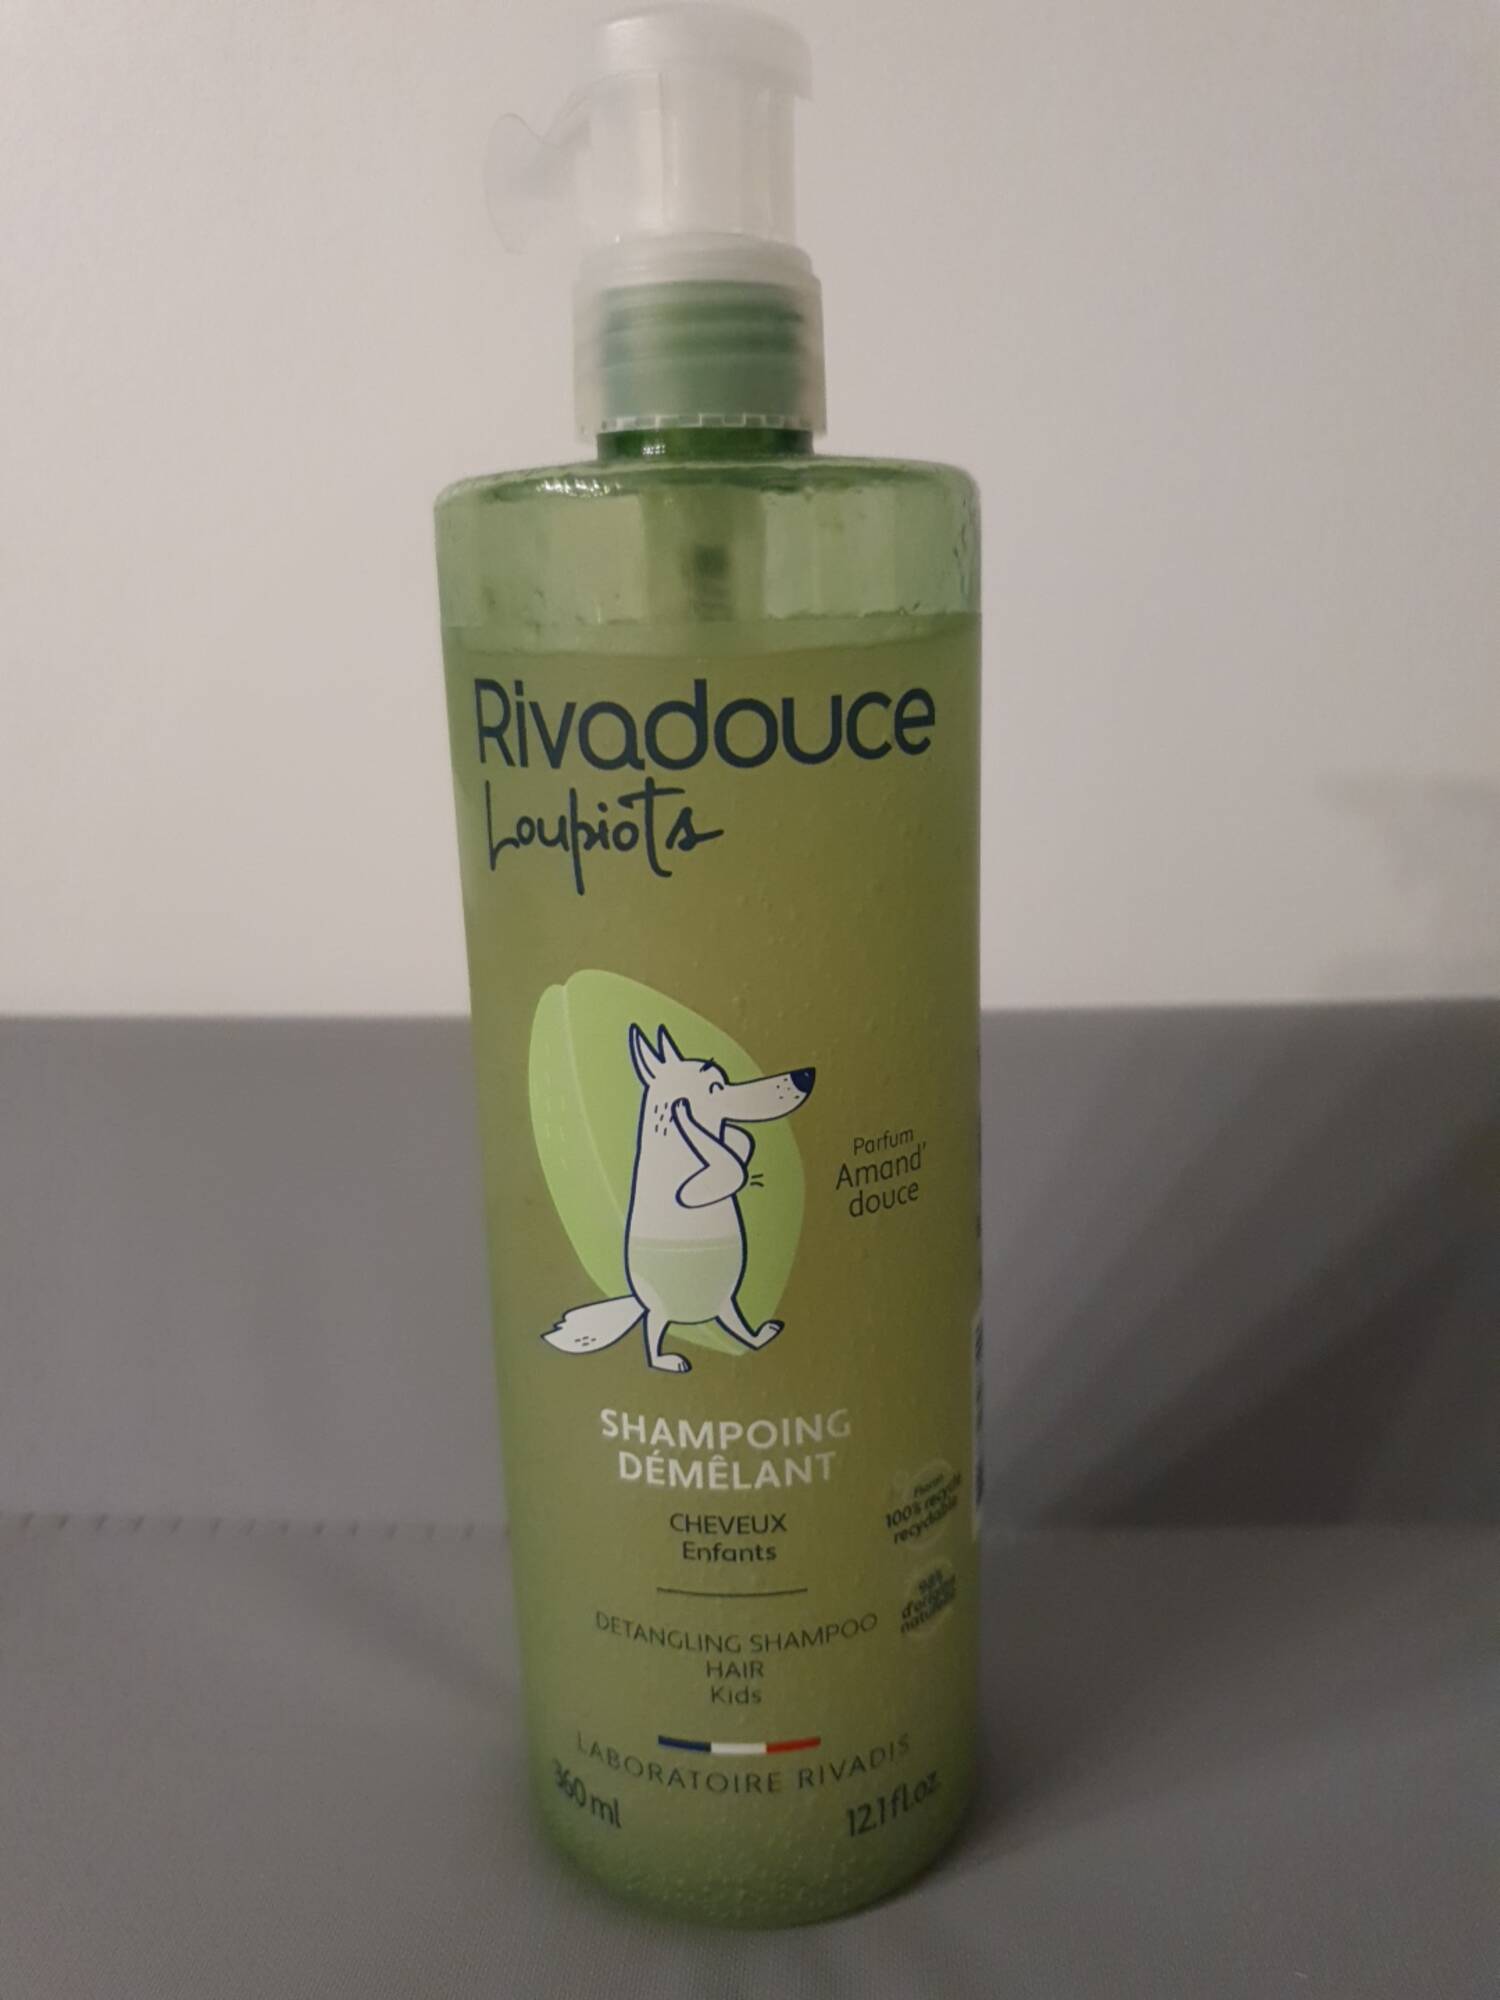 RIVADOUCE - Loupiots - Shampoing démêlant amand douce